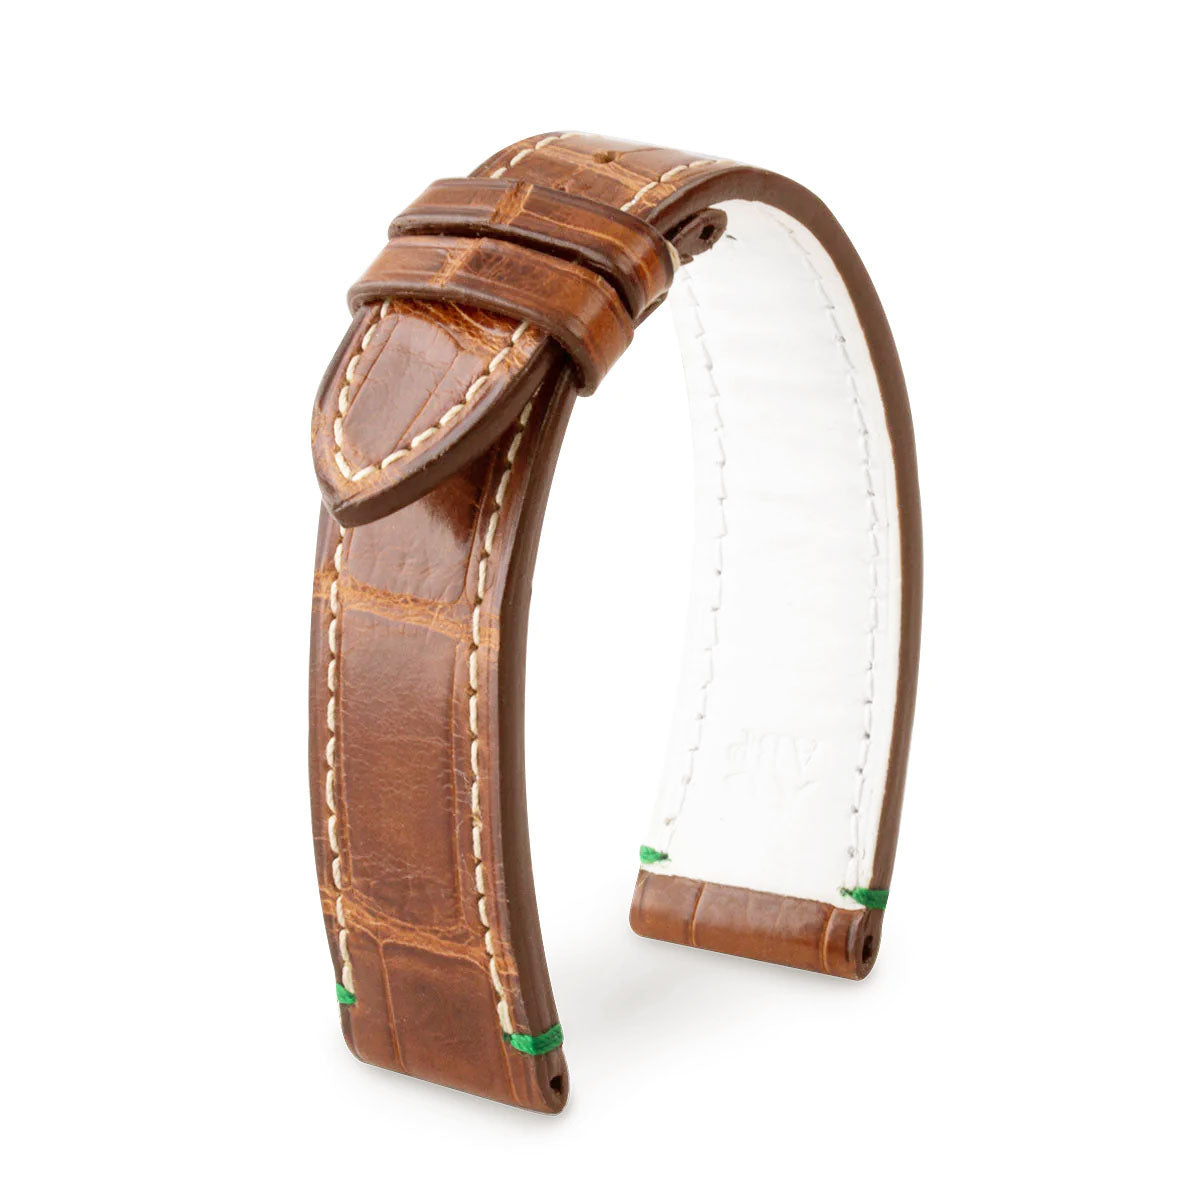 Leather watchband - Golf - Alligator (brown, white)